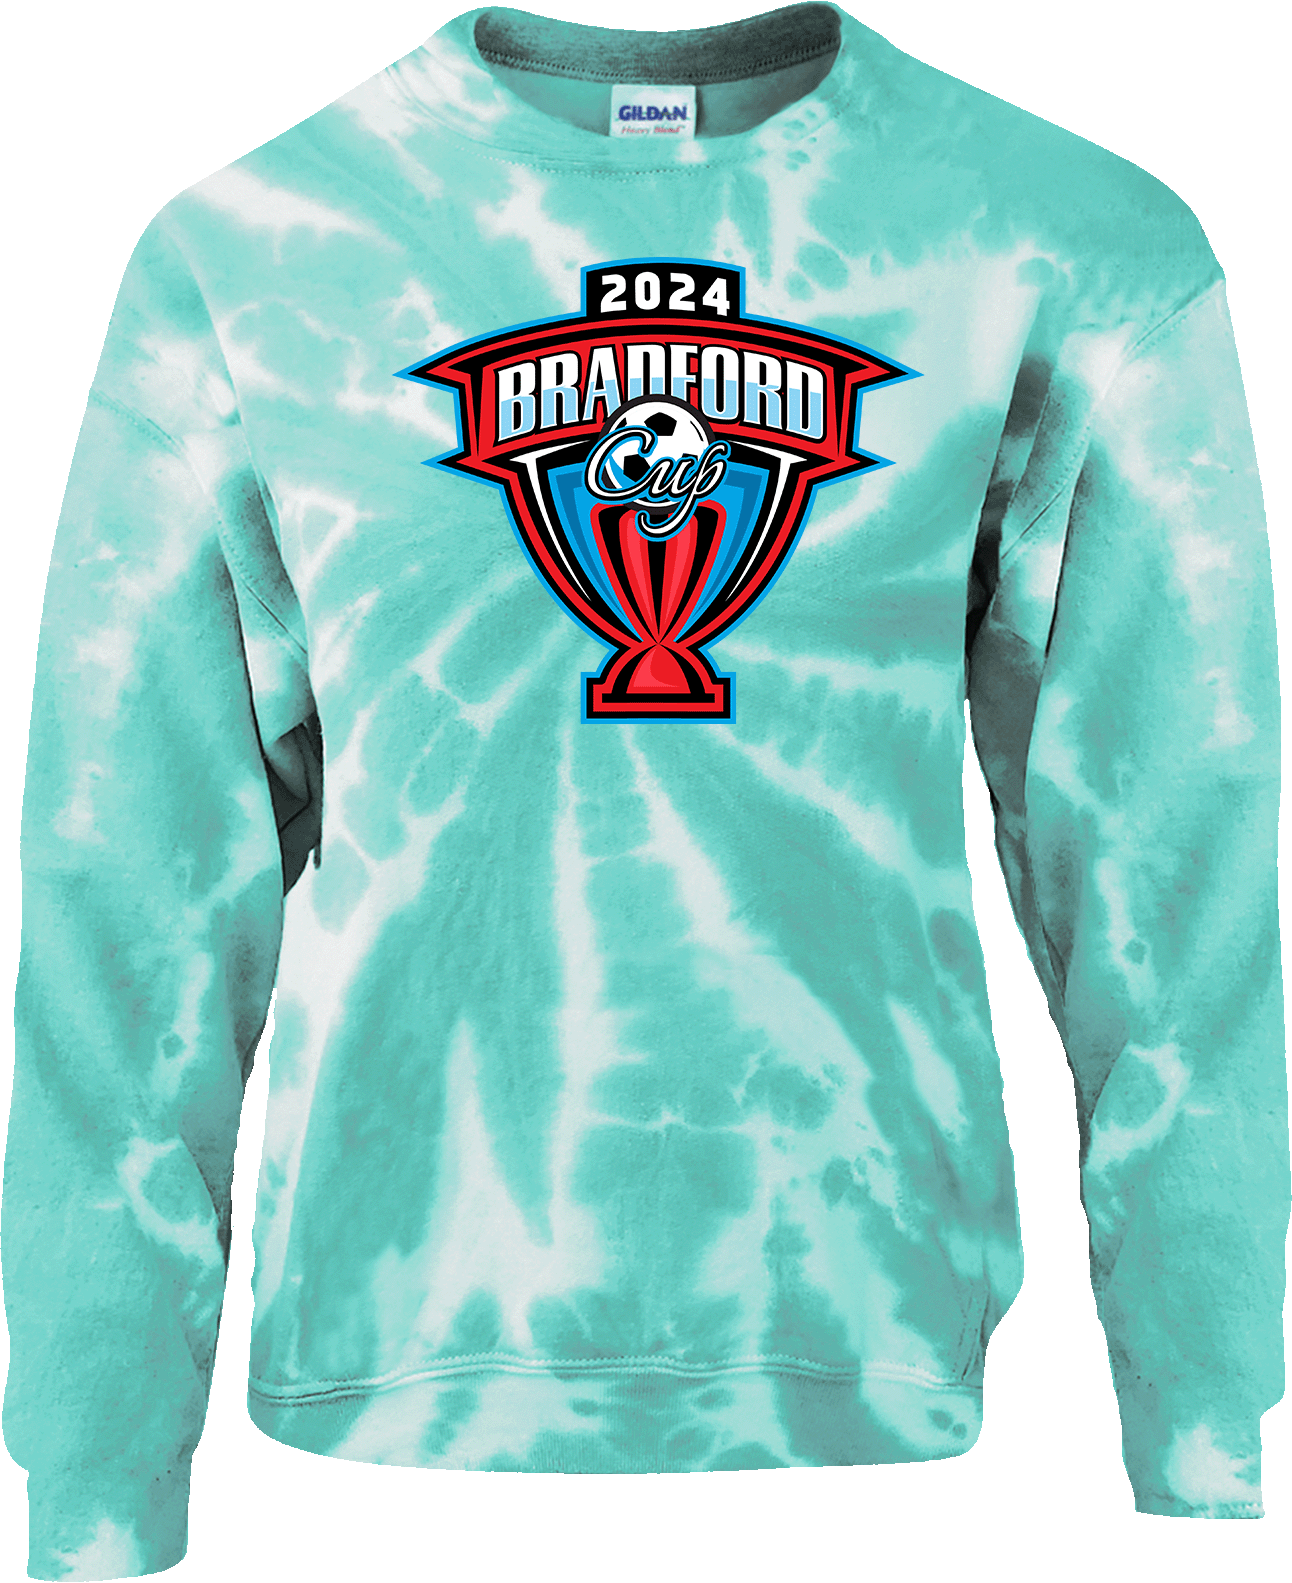 Crew Sweatershirt - 2024 Bradford Cup